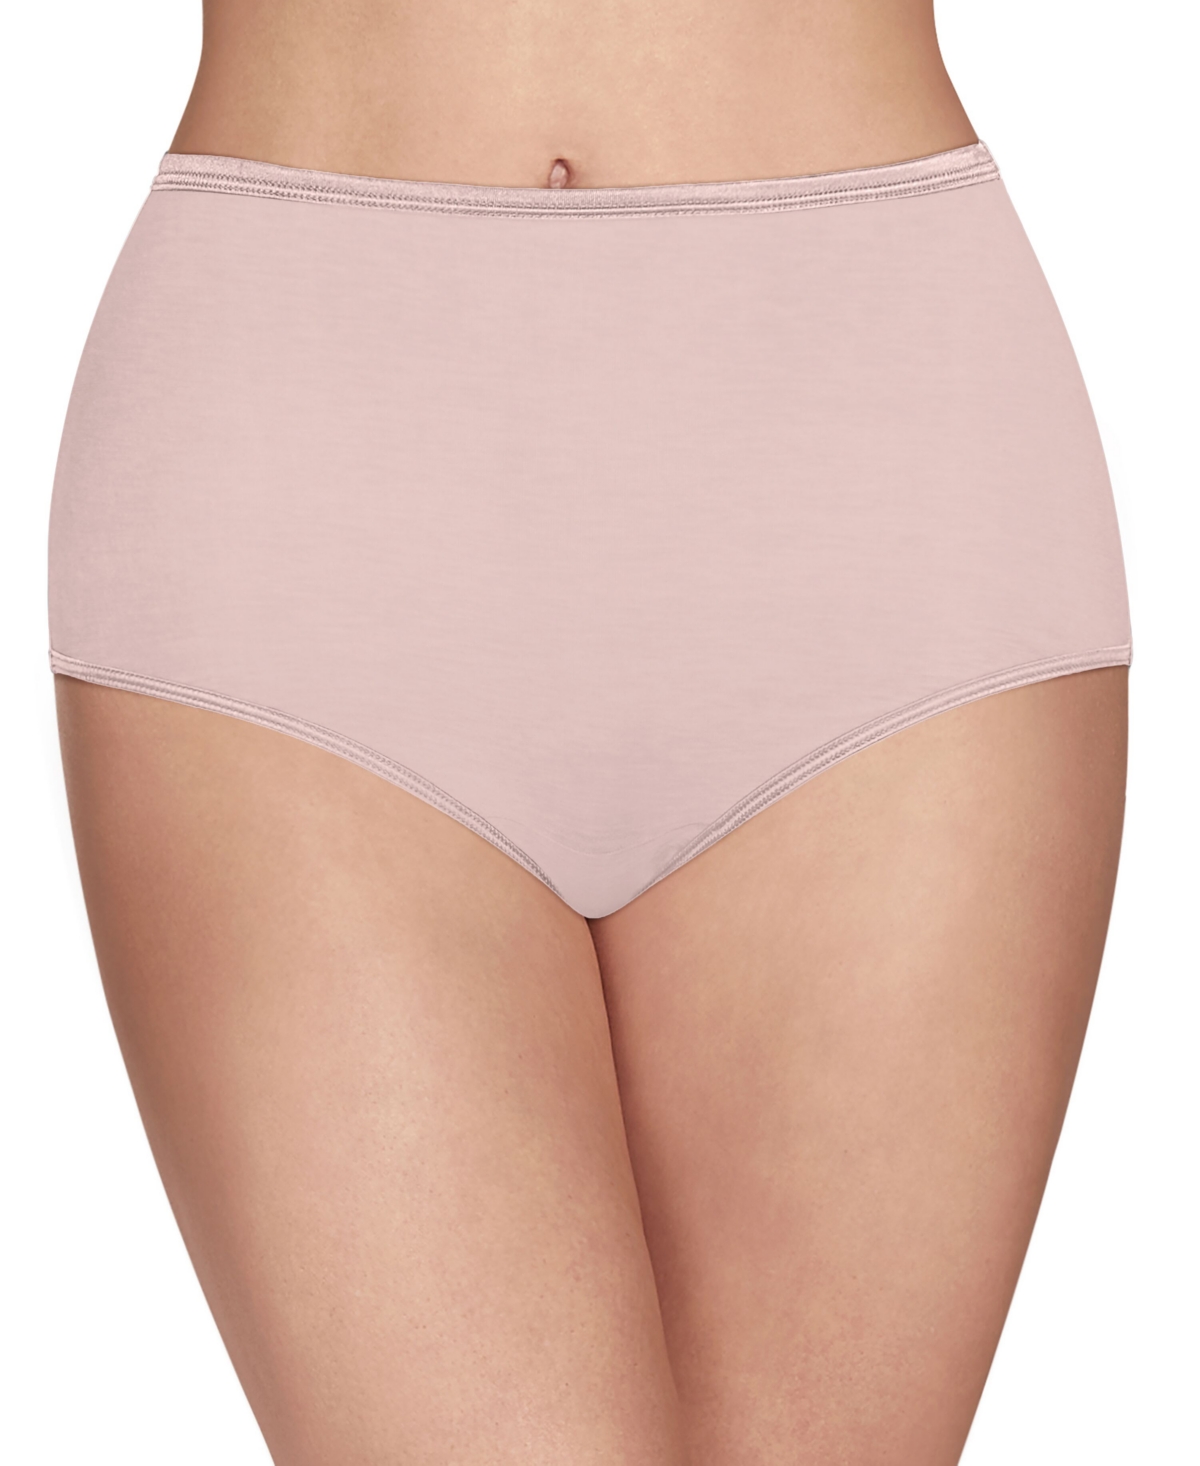 Vanity Fair Illumination Brief Underwear 13109, Also Available In Extended Sizes In Quartz